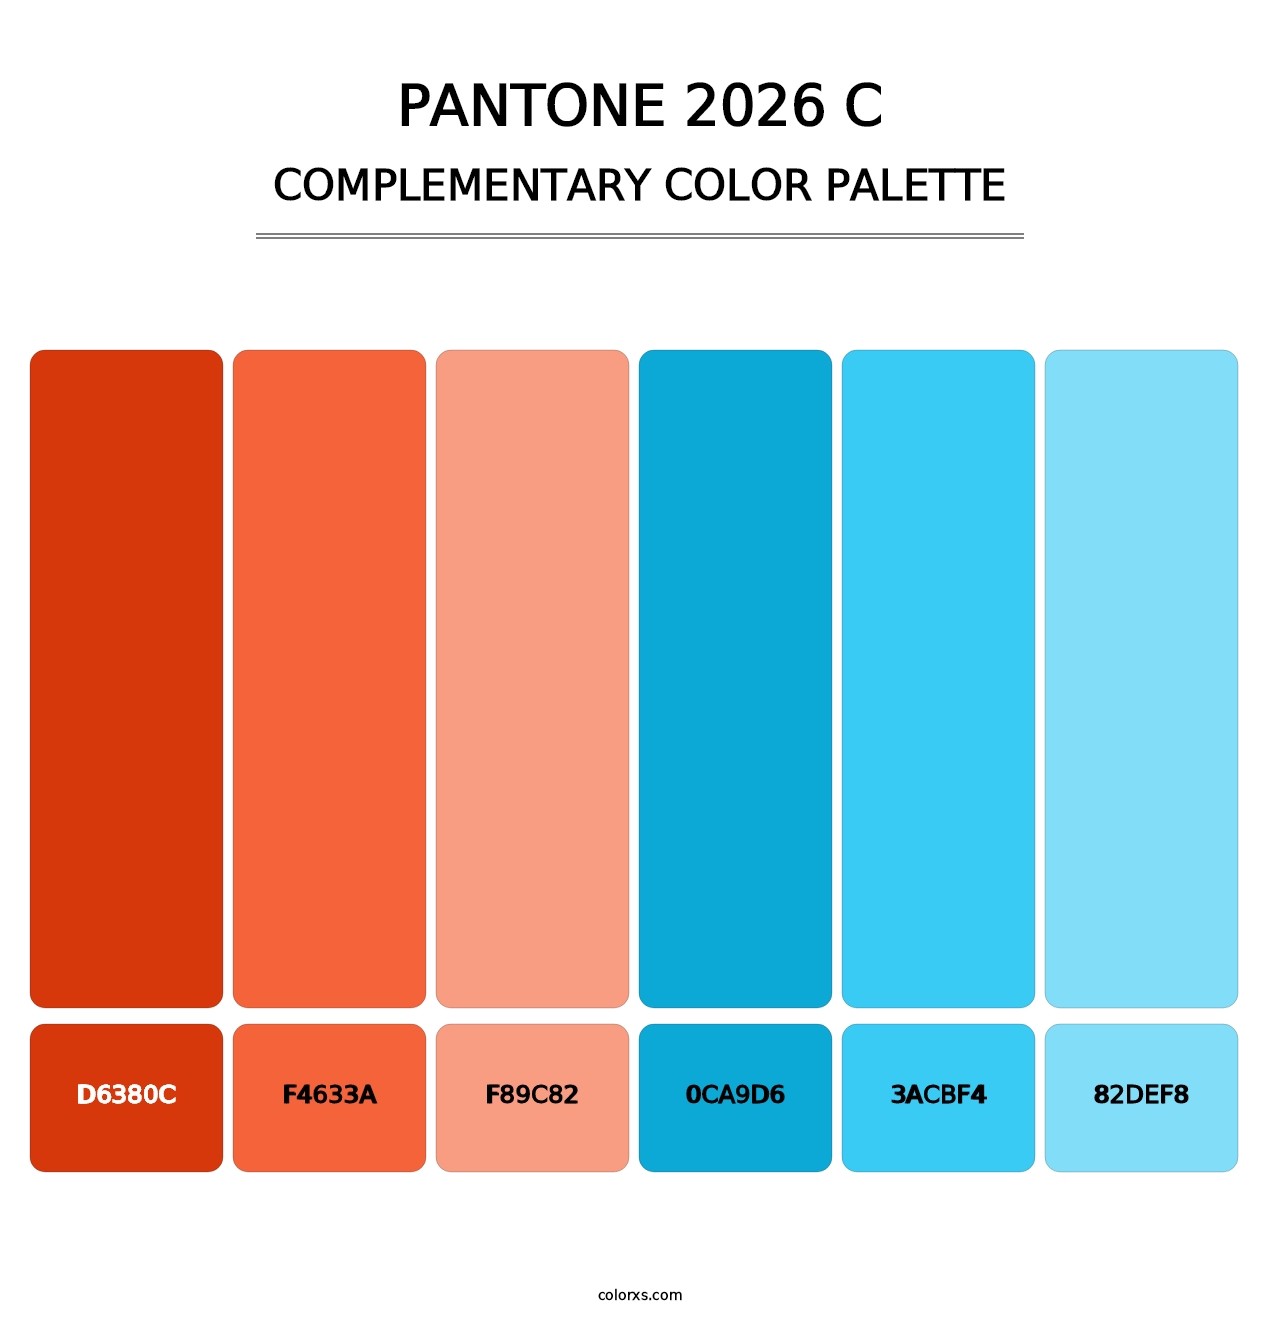 PANTONE 2026 C - Complementary Color Palette